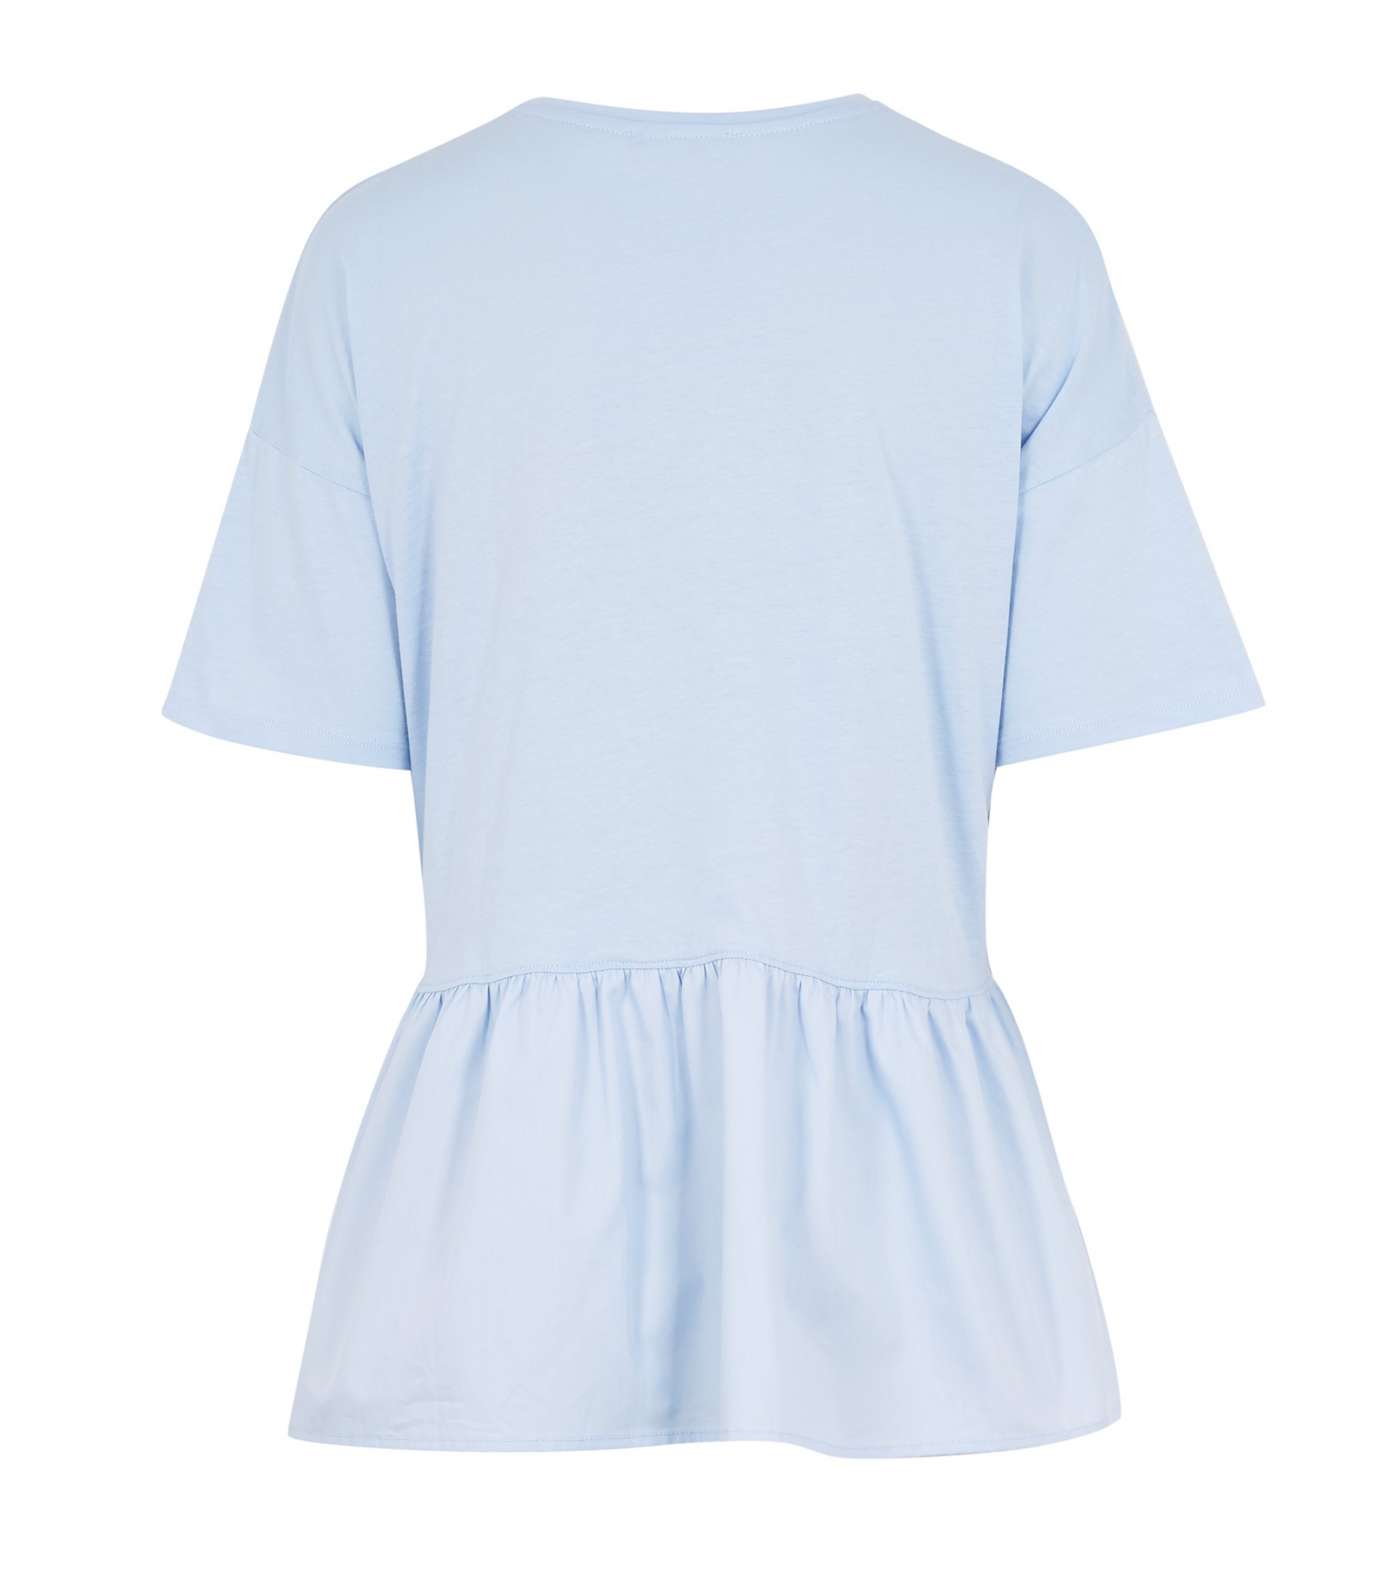 Pale Blue Woven Peplum T-Shirt Image 2